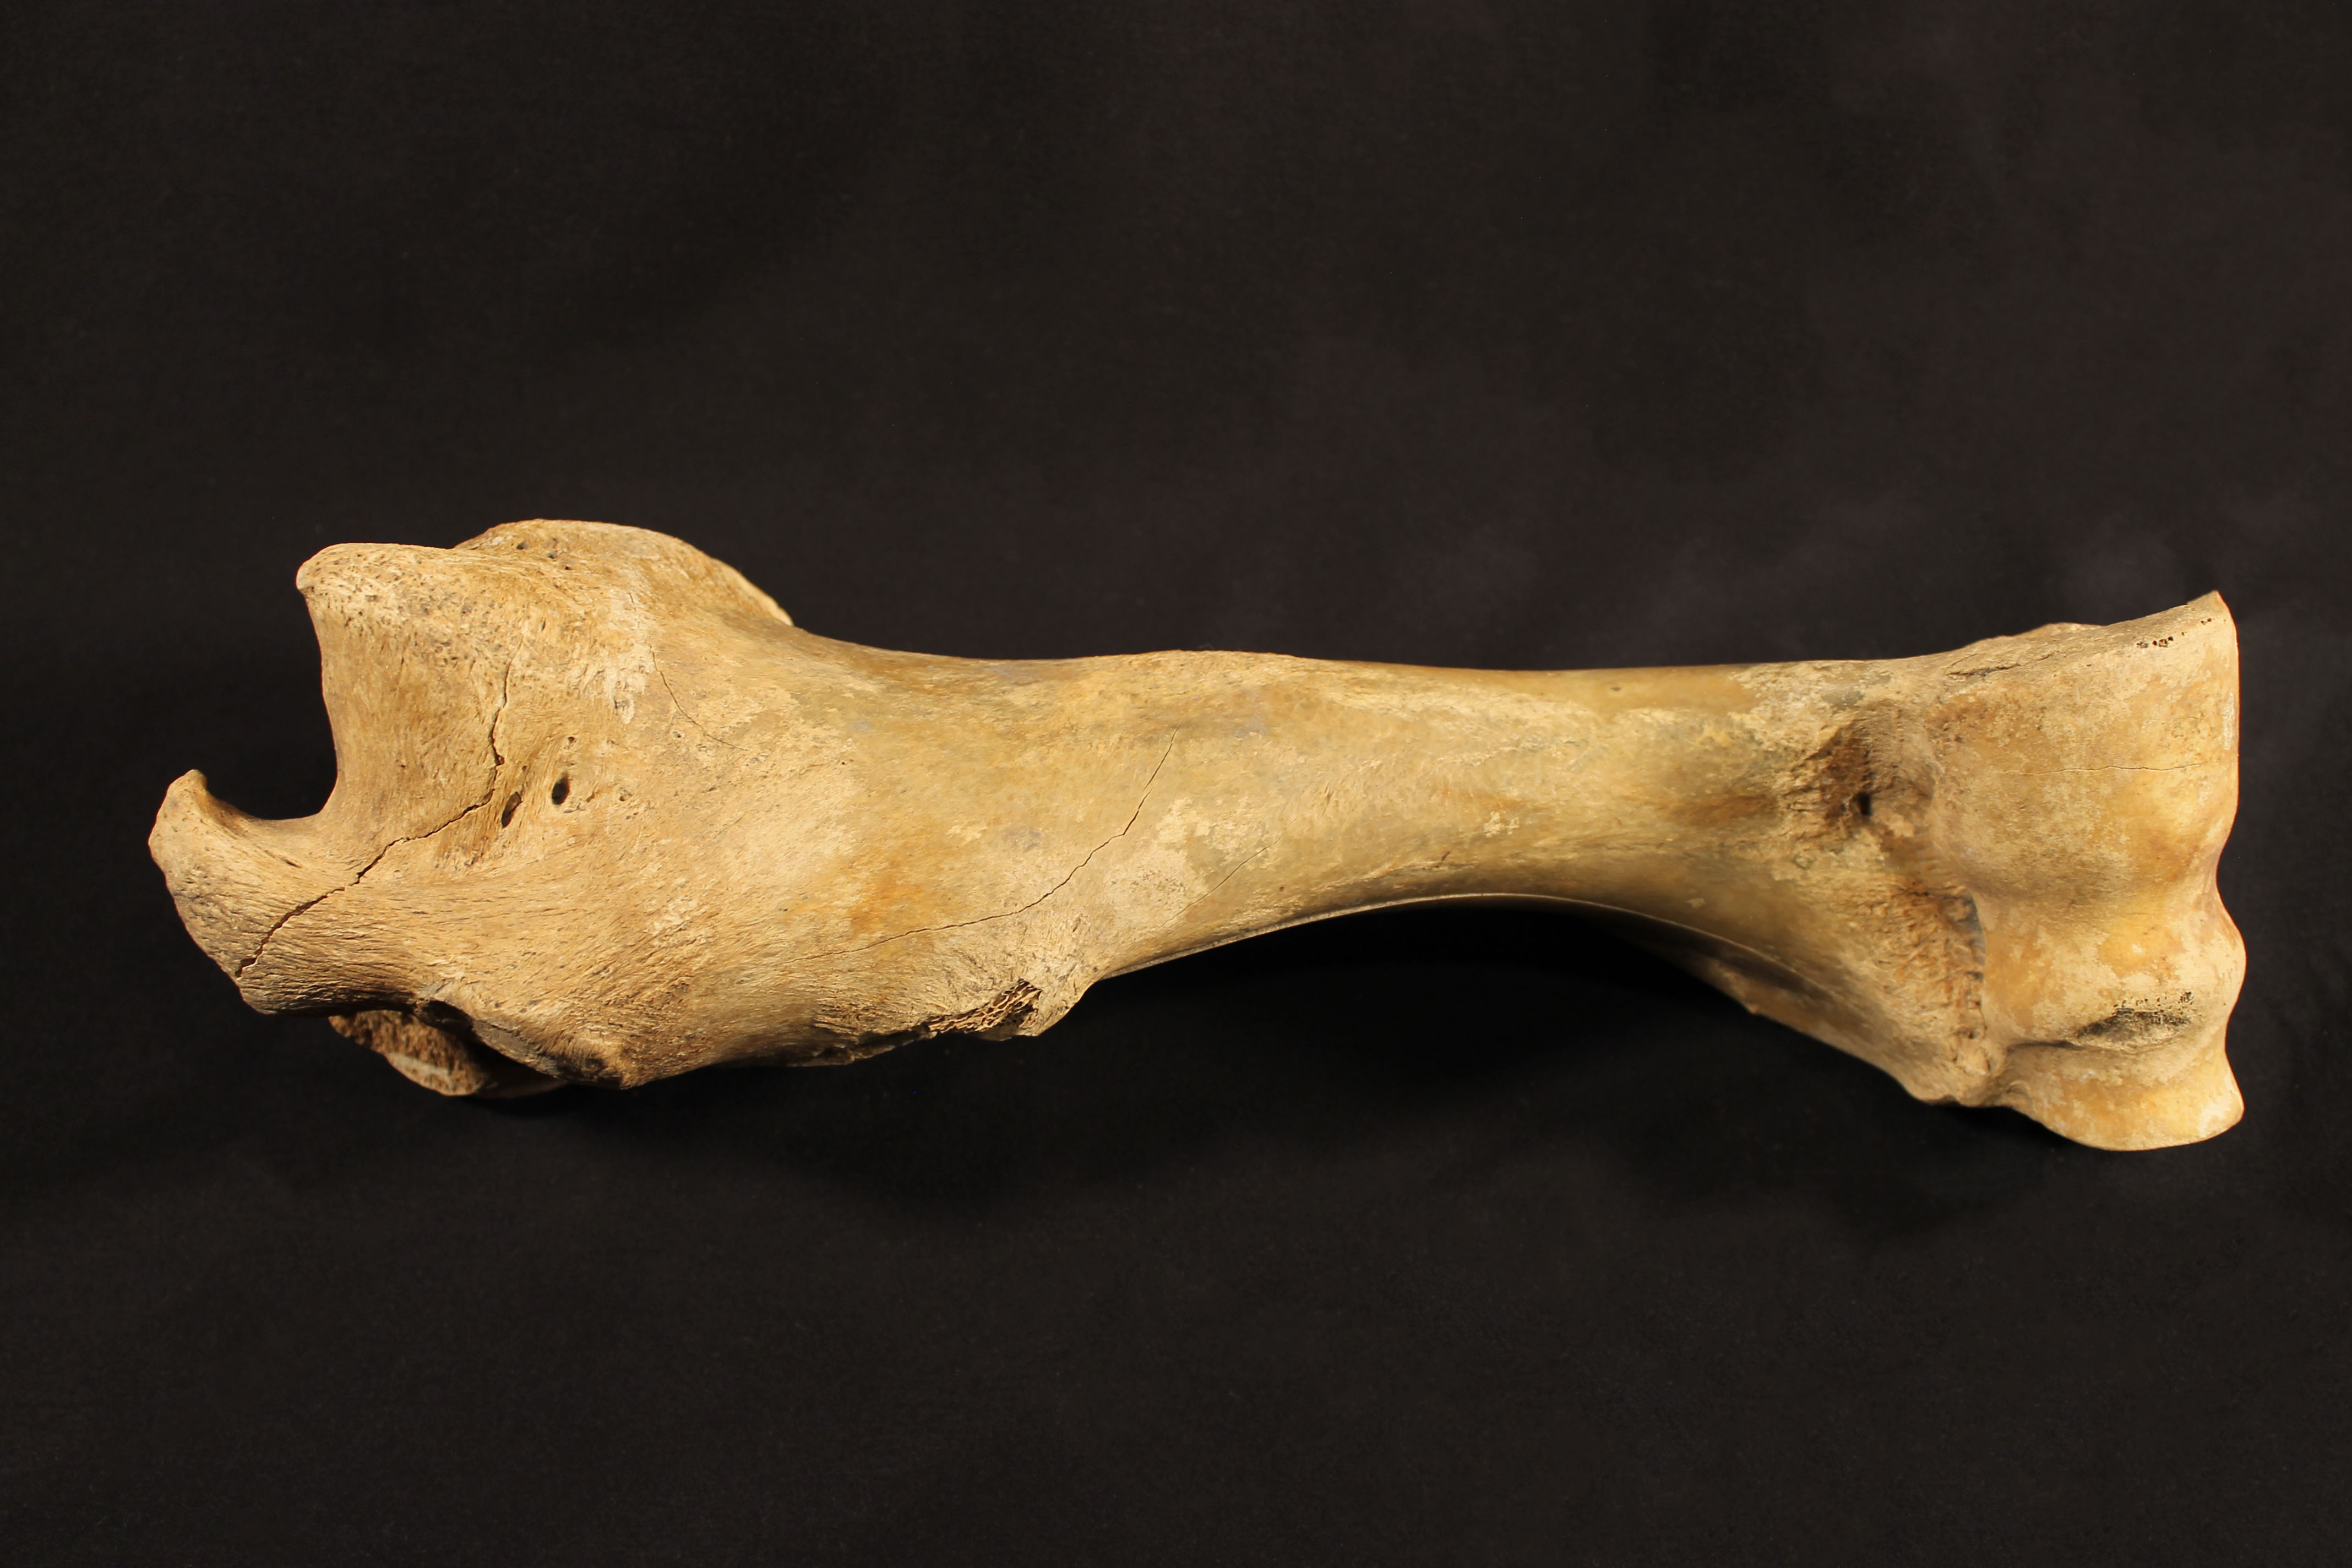 Humerus bone of a bison